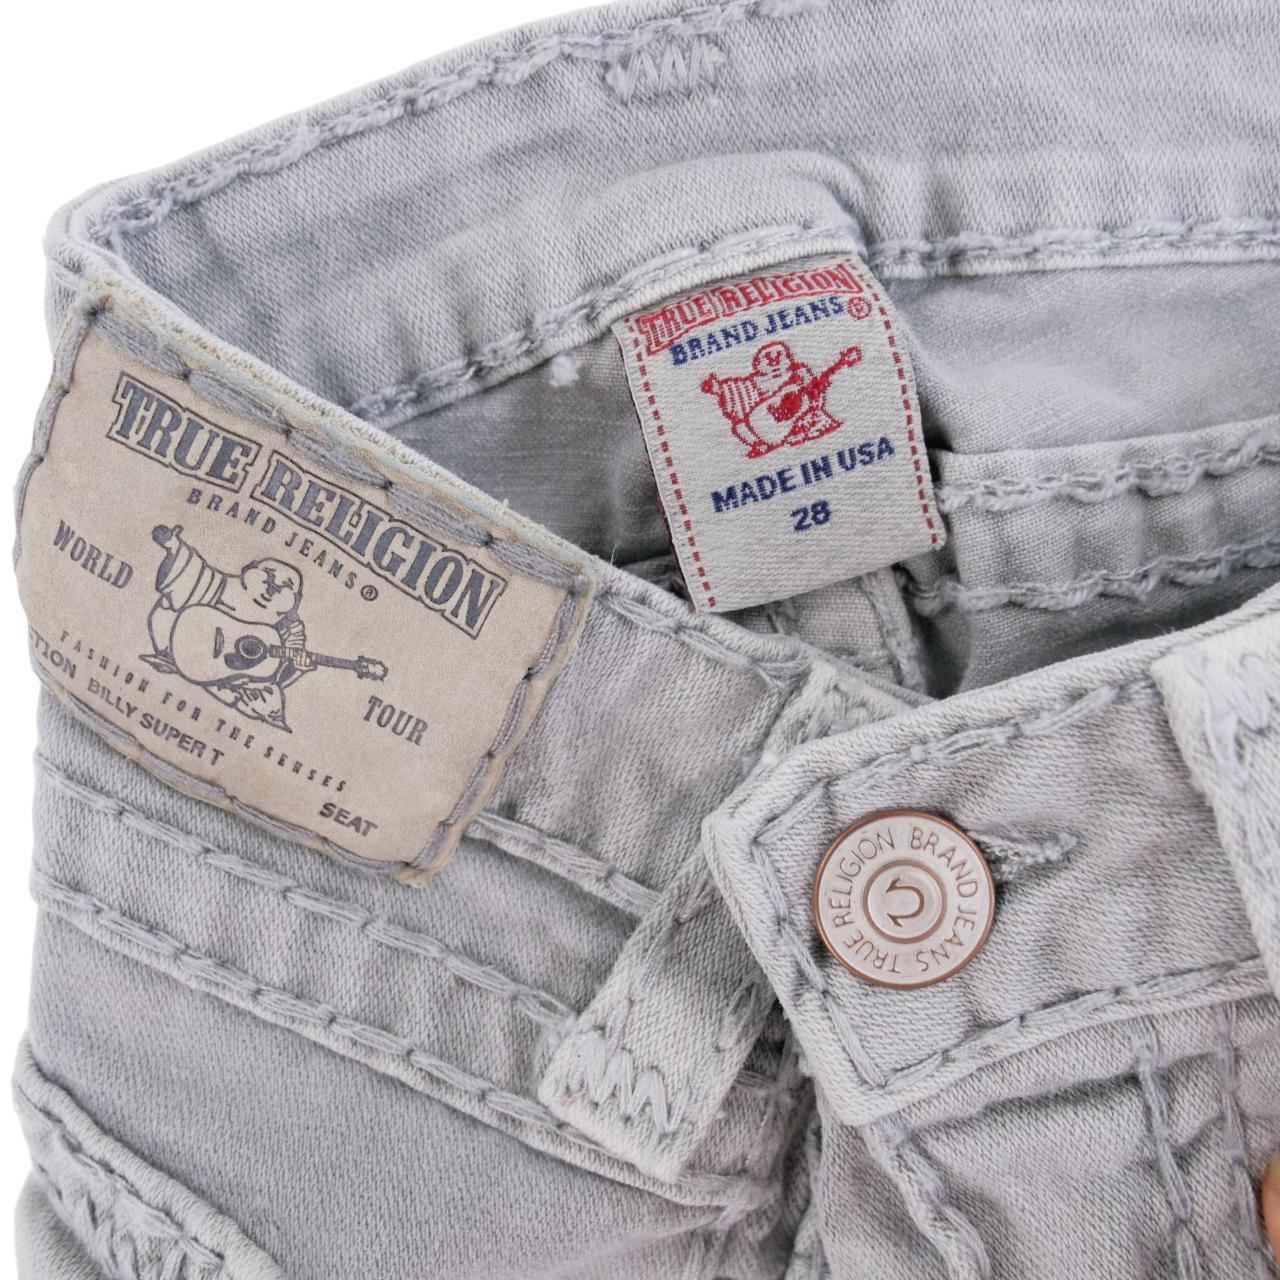 Vintage True Religion Jeans Women's Size W26 - Known Source